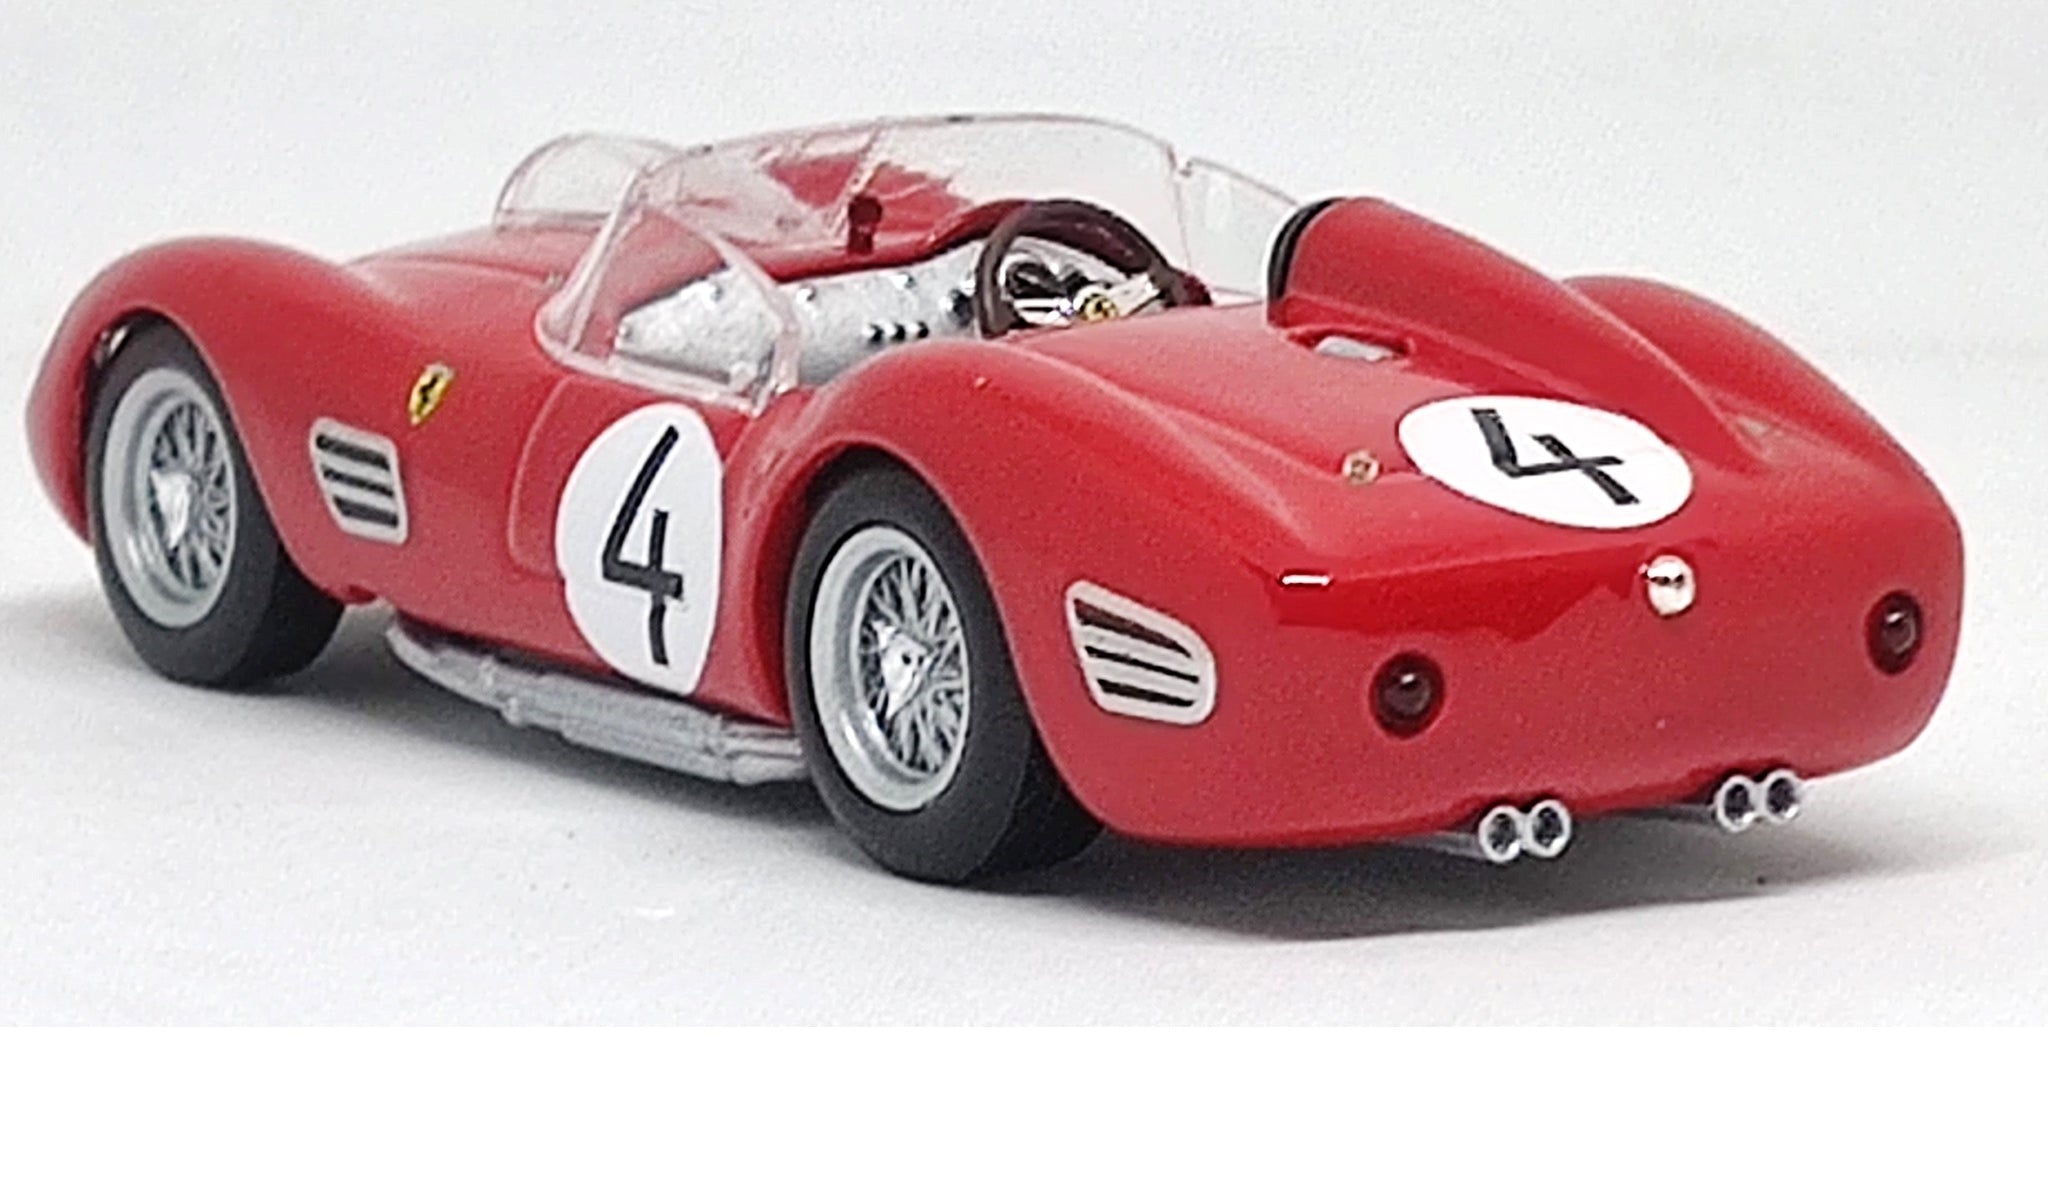 Bburago Ferrari 250 Testa Rossa 1000 km Nurburging 1959 by P Hill- O Gendeblen 1/43